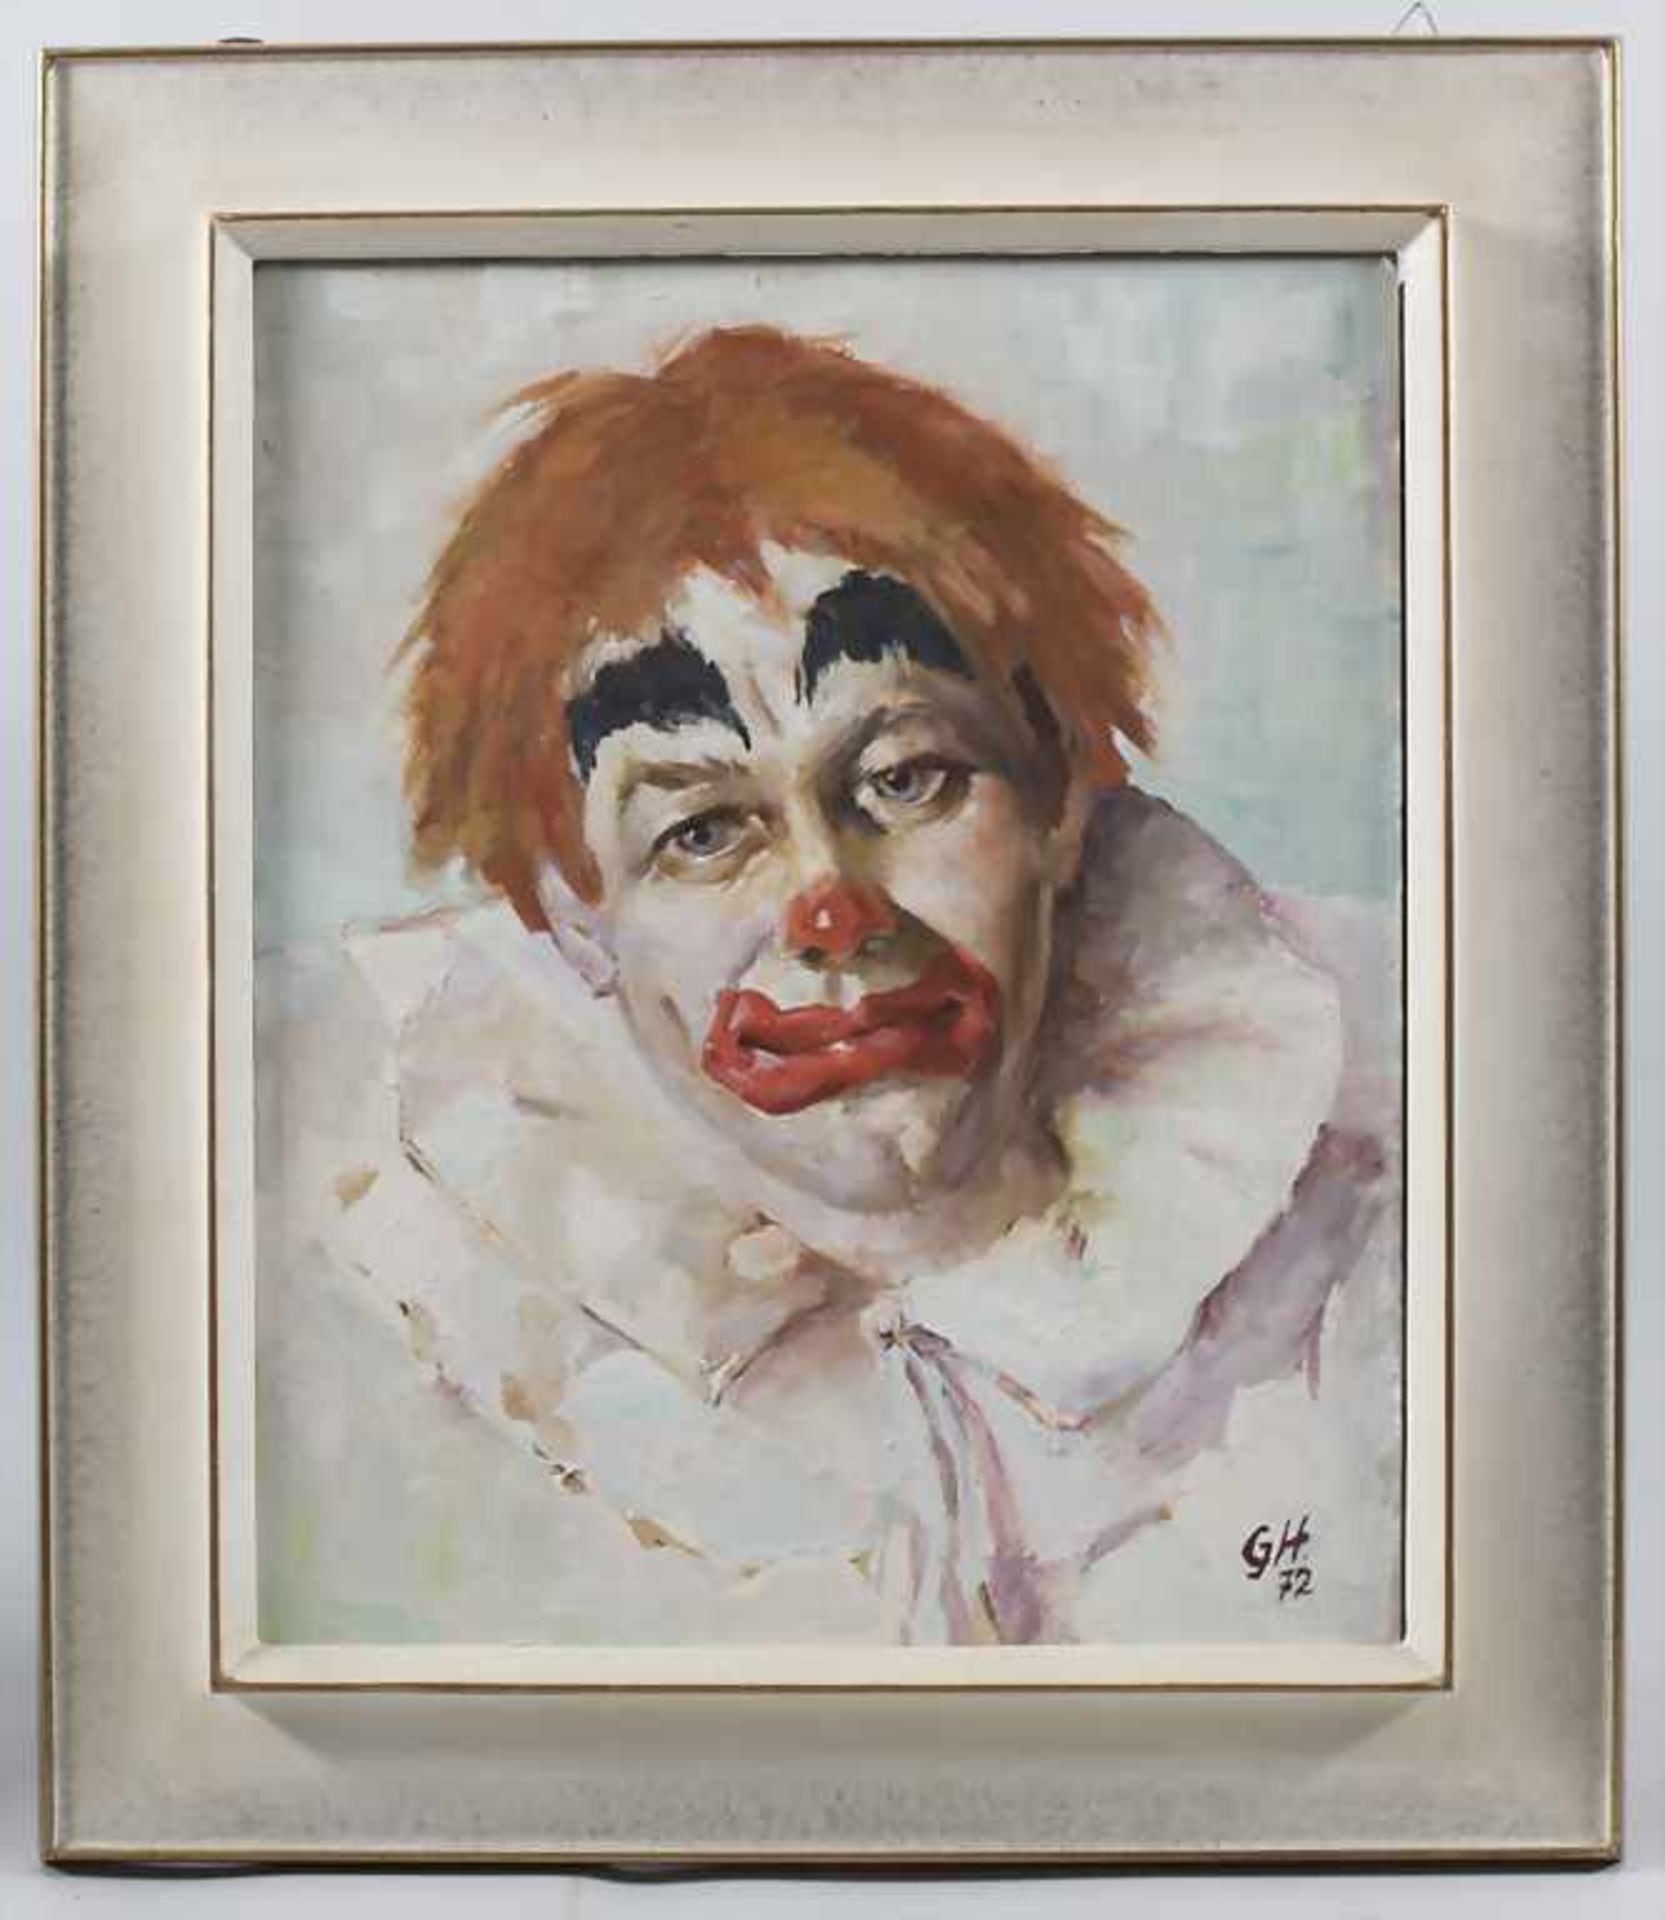 Monogrammist 'GH' (tätig um 1972), 'Trauriger Clown' / 'A sad clown' - Image 2 of 5